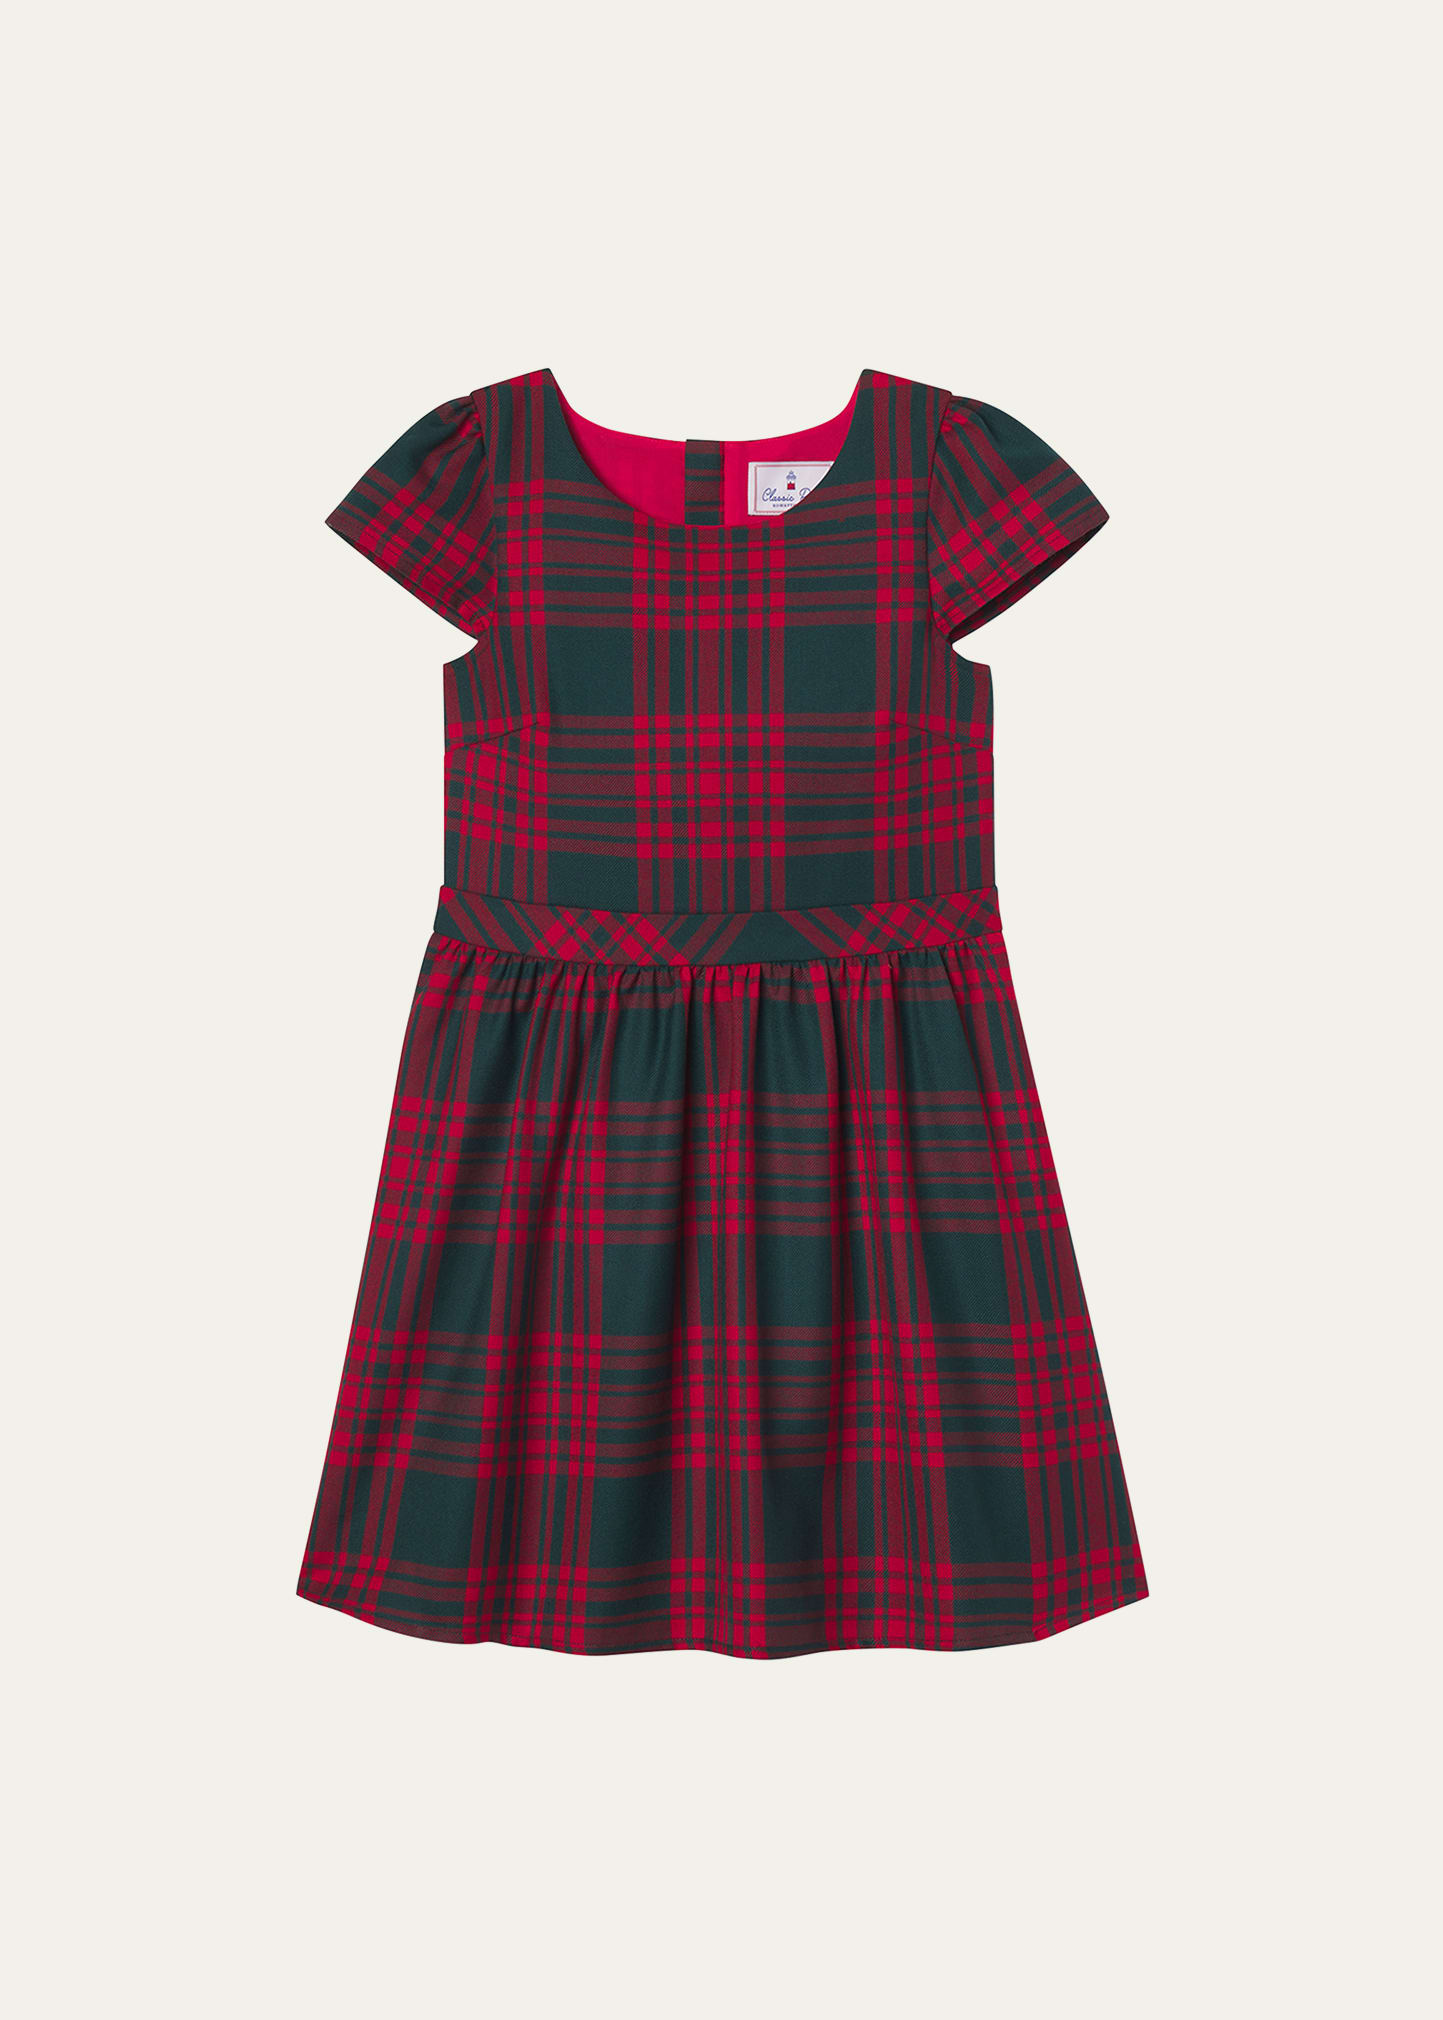 Classic Prep Childrenswear Kids' Girl's Tilly Tartan Holiday Dress In Hunter Tartan